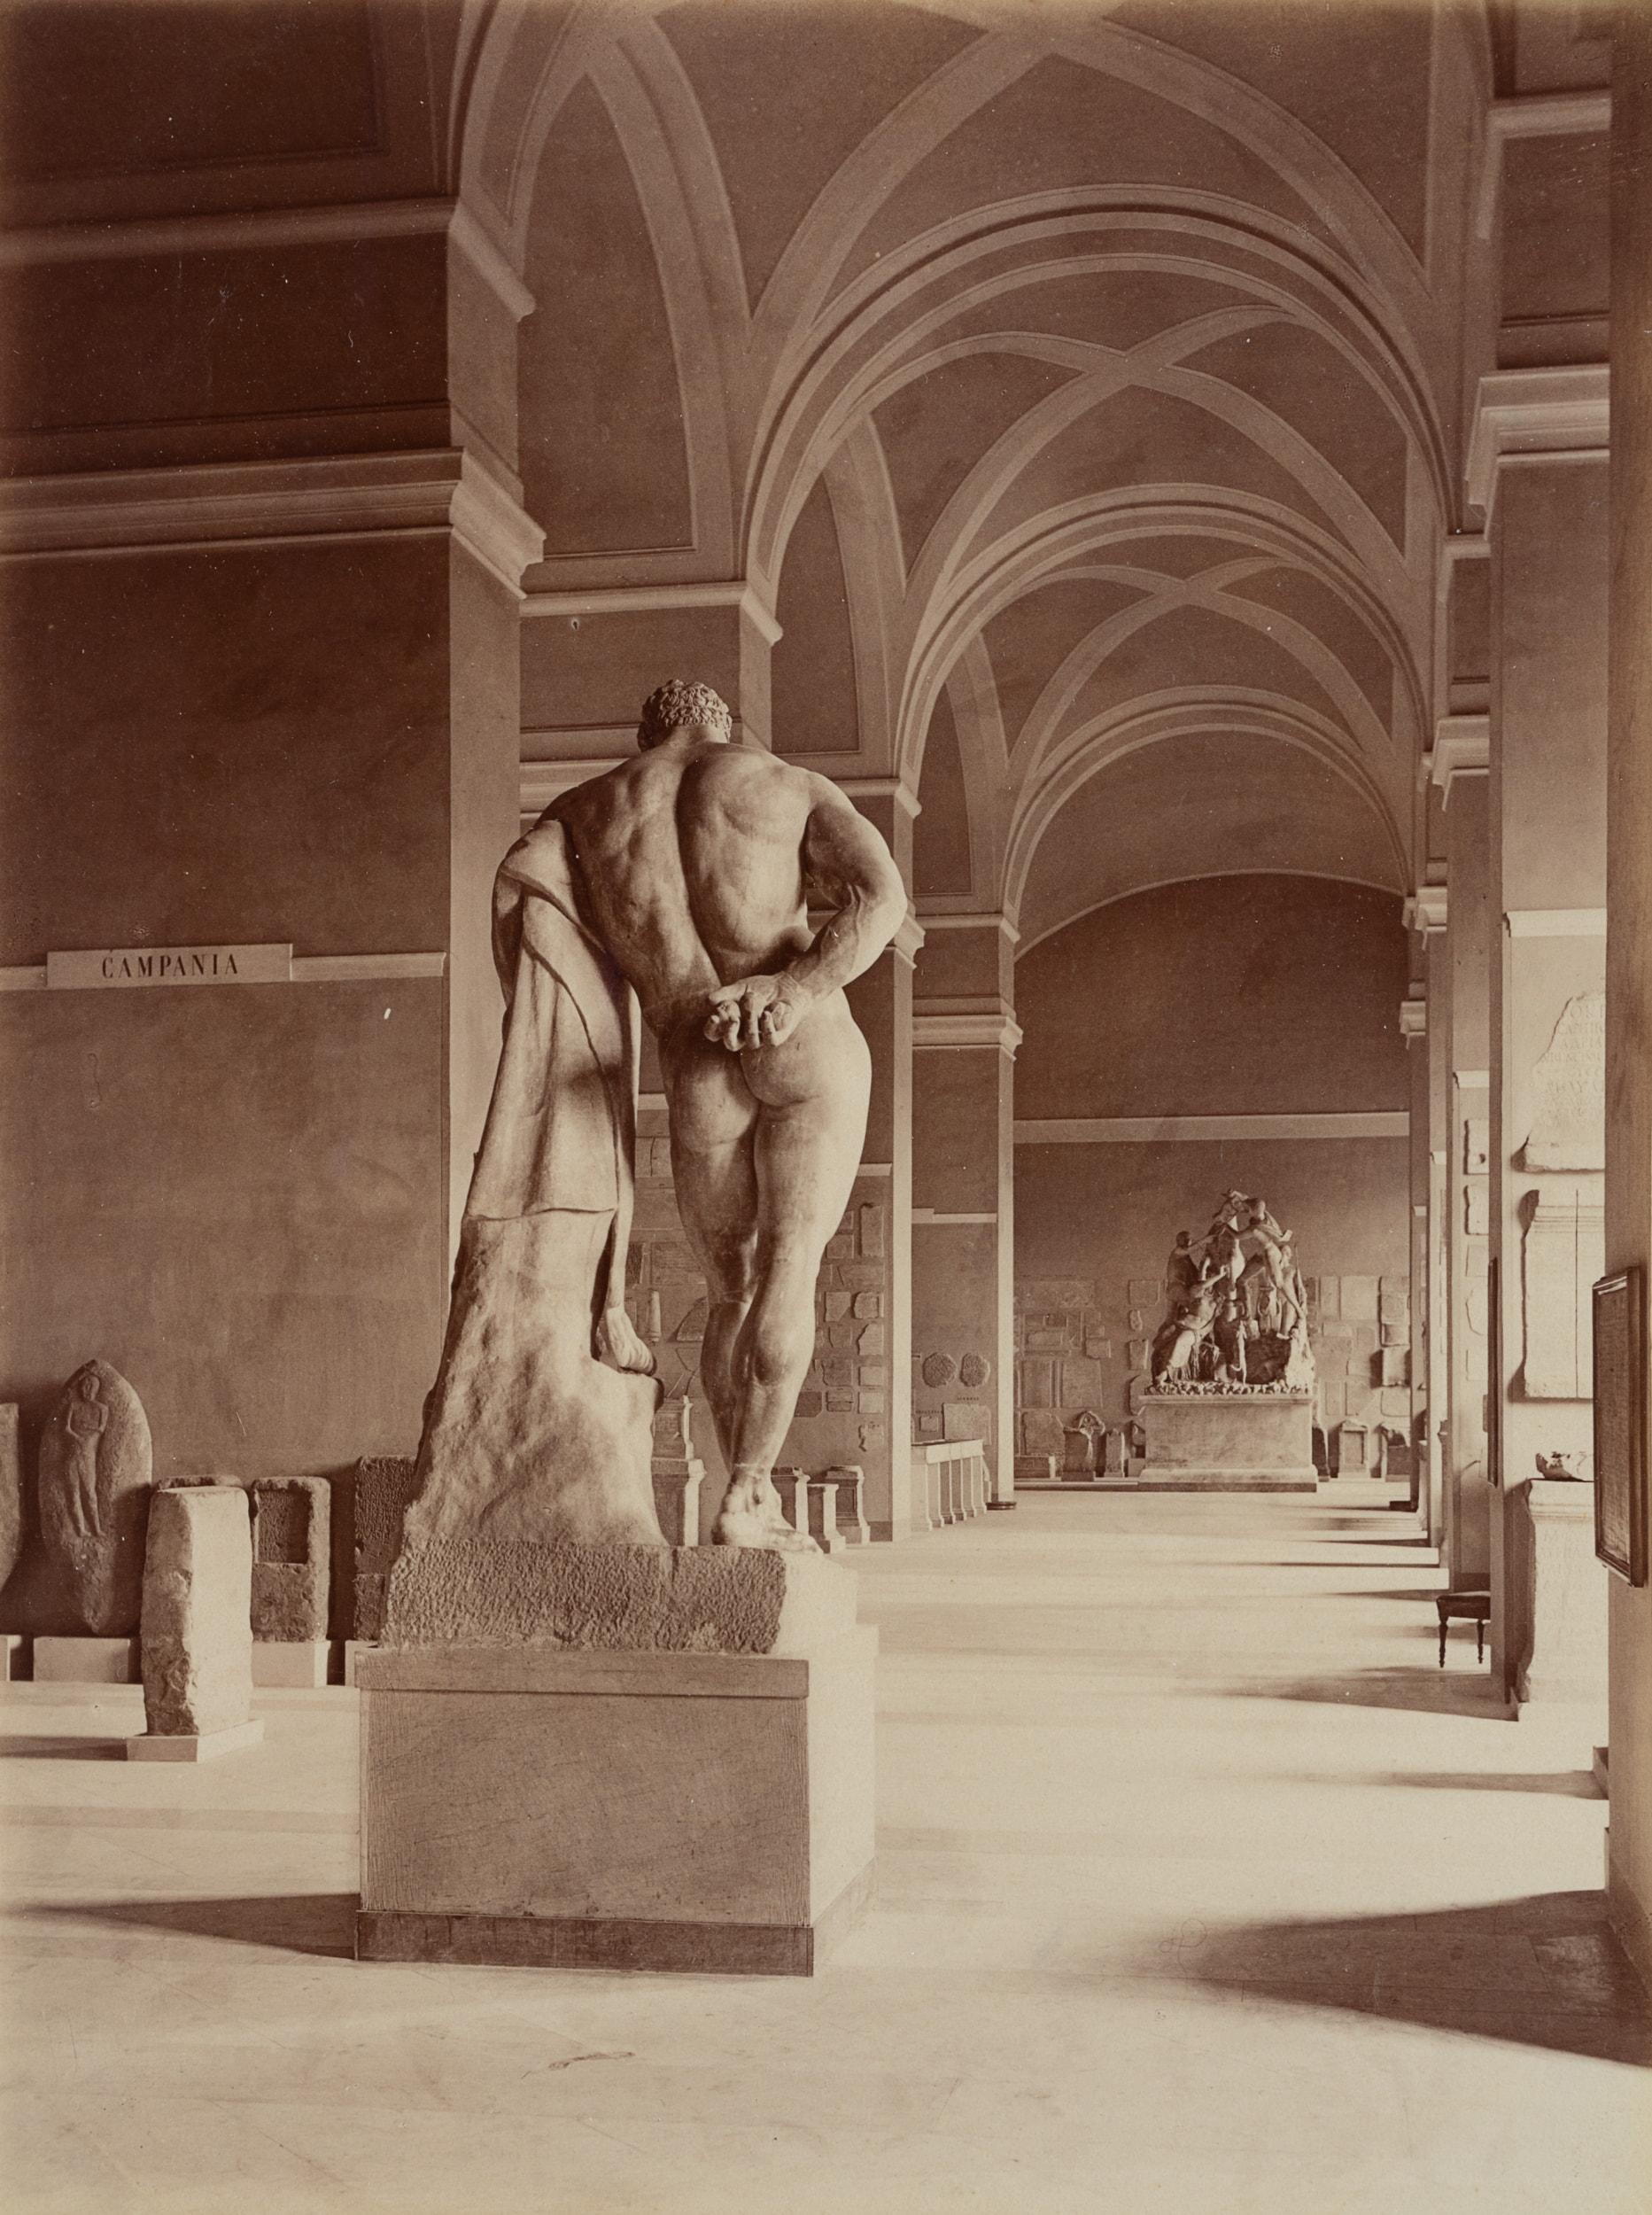 Black and White Photograph Fratelli Alinari - Herkules Farnese, Musée national, Neapel